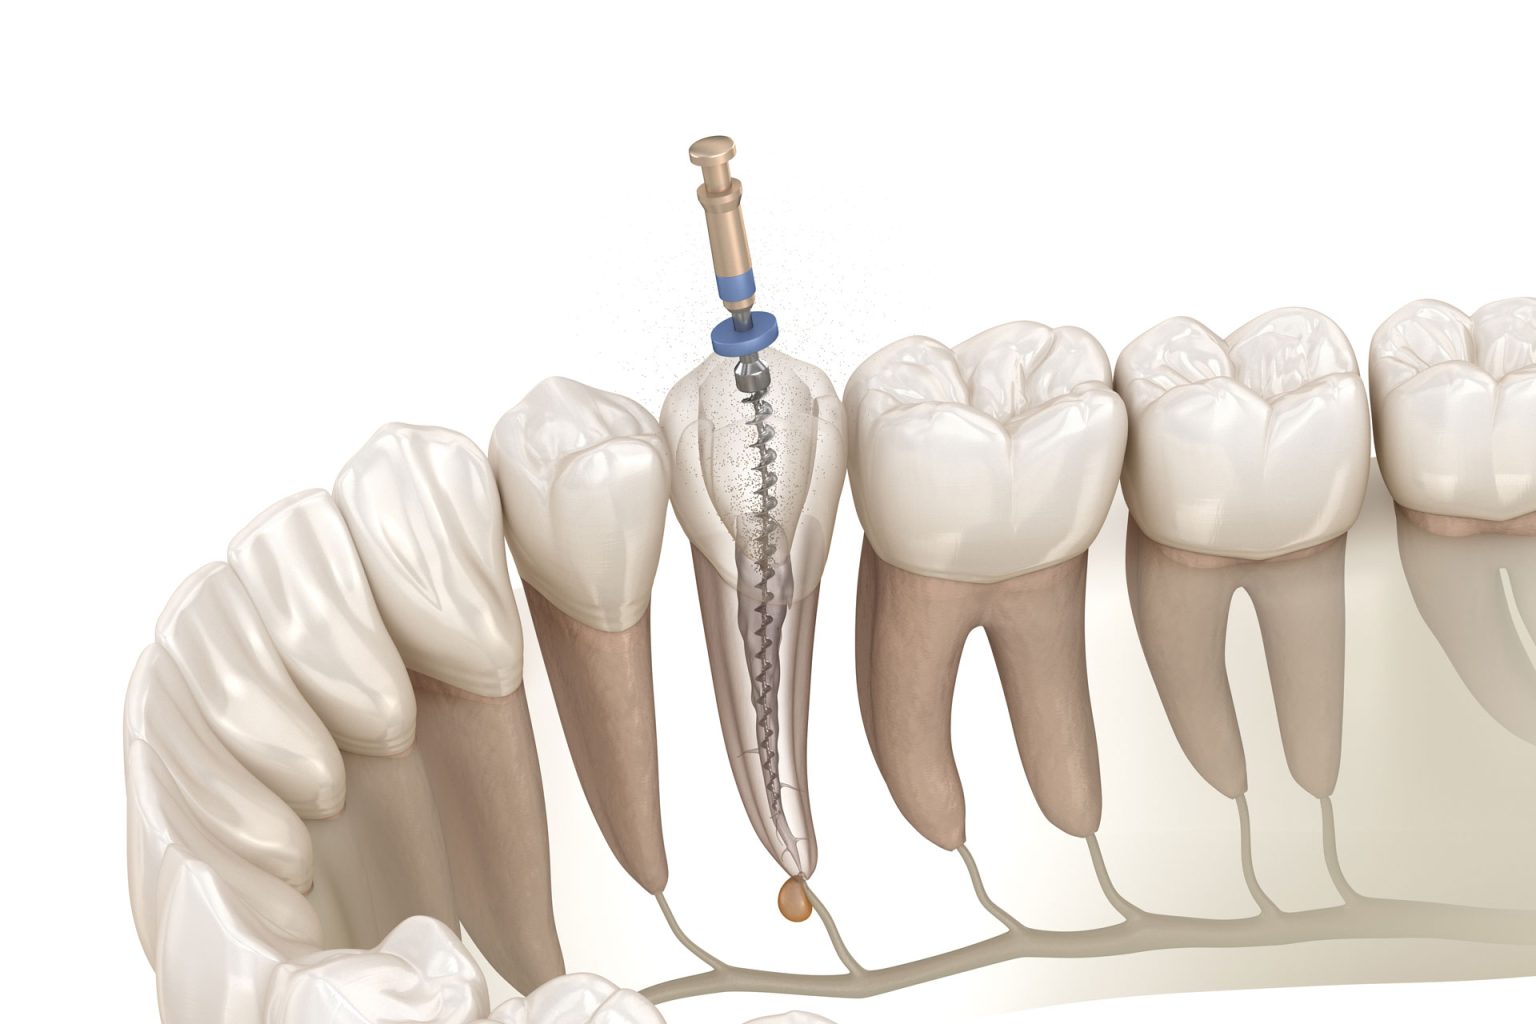 endodonzia cura canalare dentista bologna centro smm 1536x1024 1